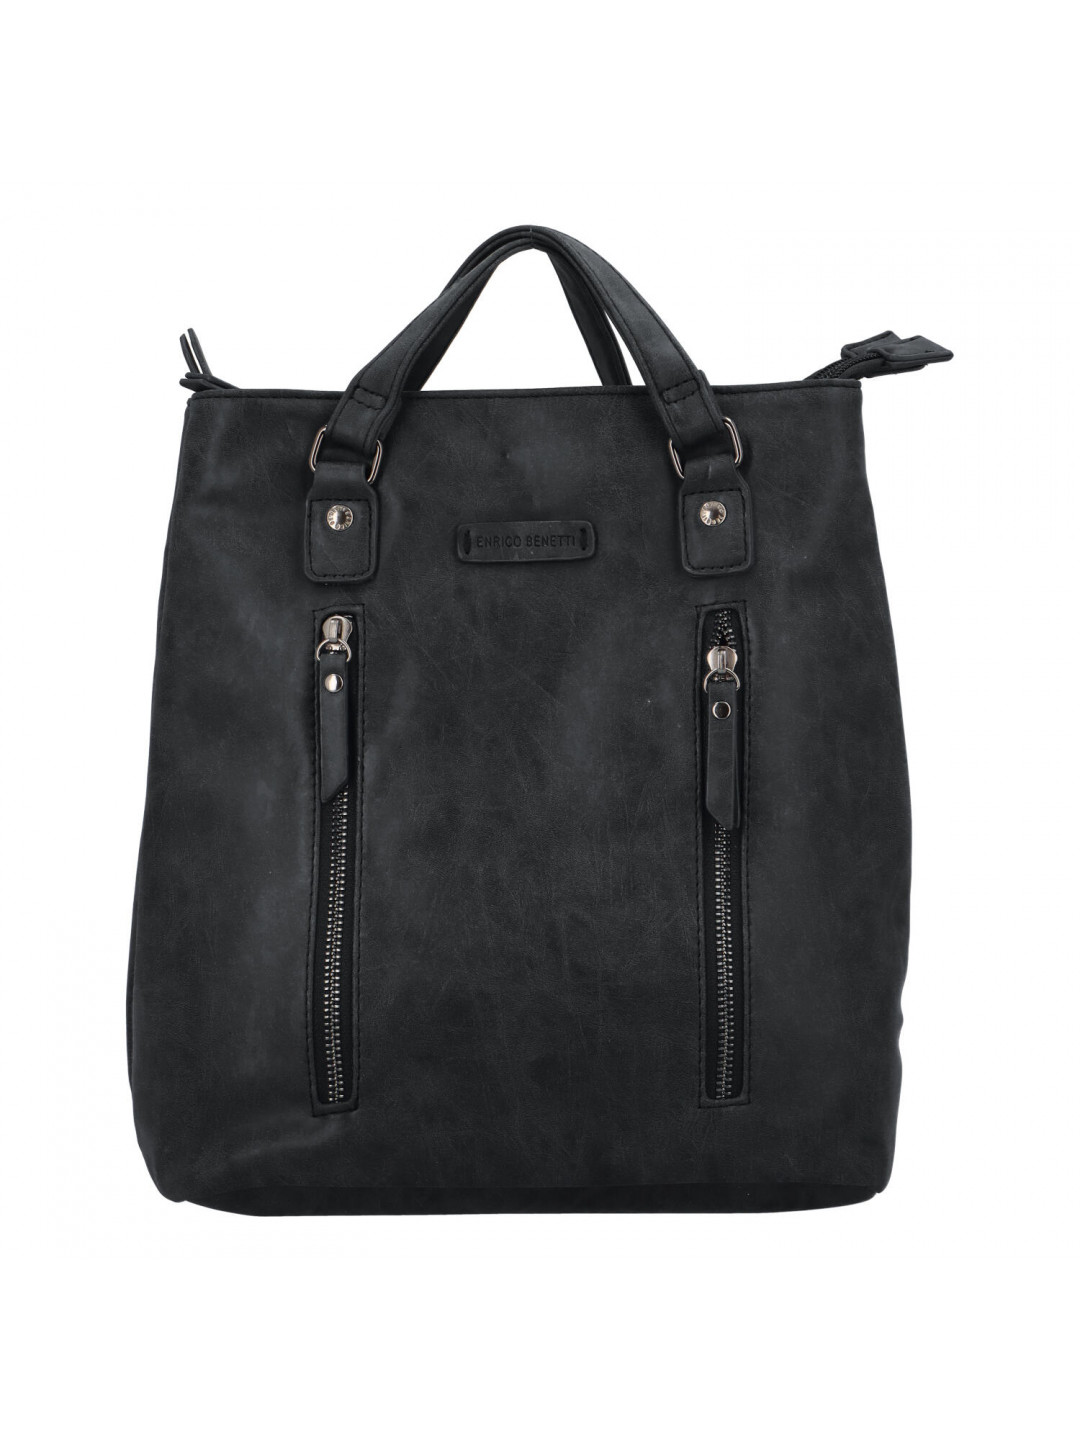 Dámský stylový batoh kabelka černý – Enrico Benetti Brisaus